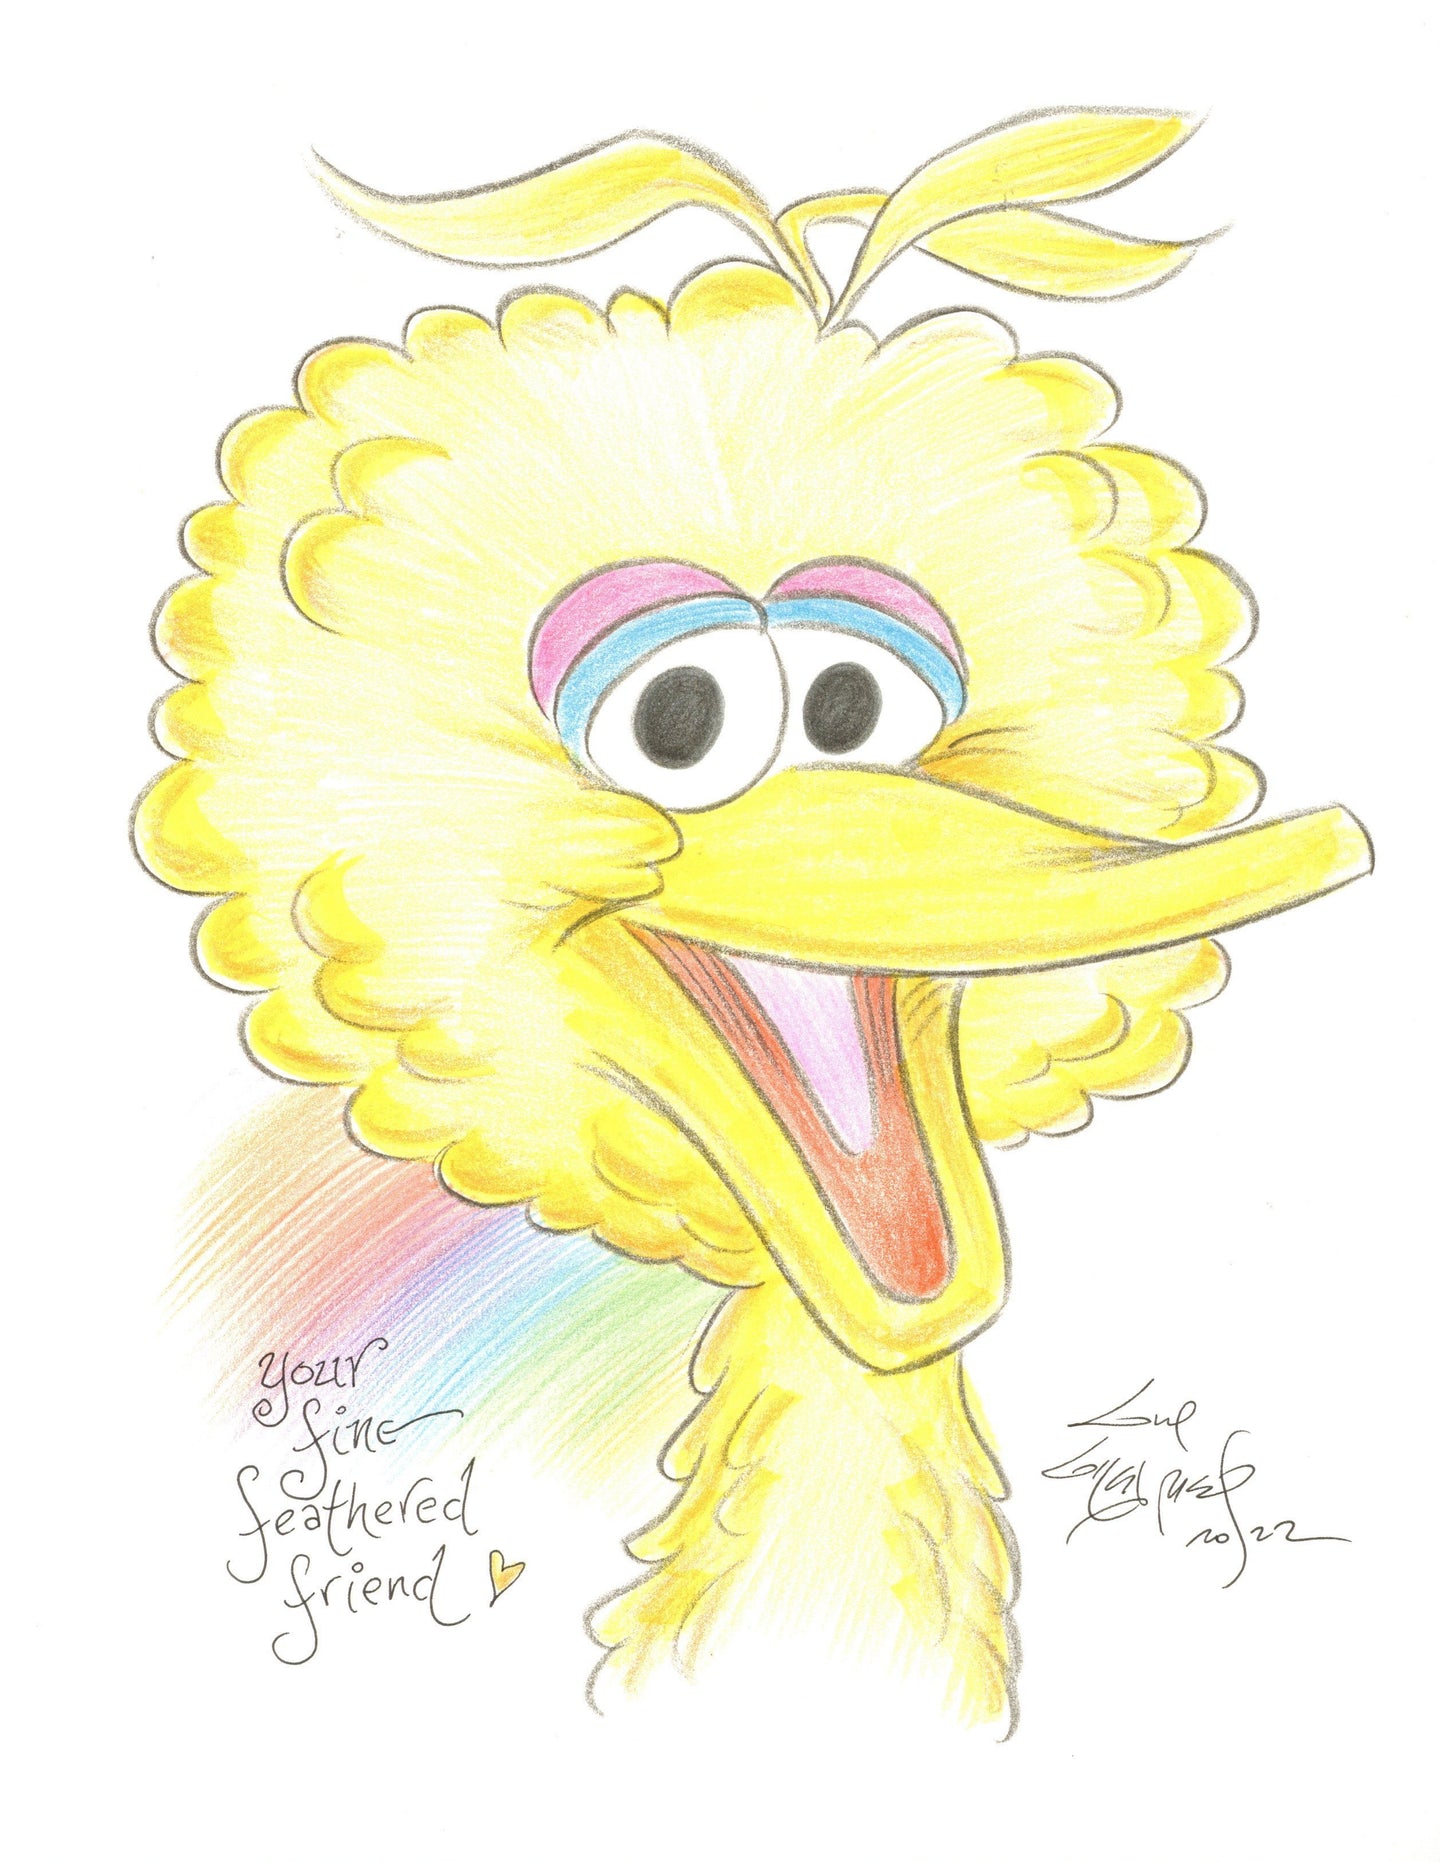 Sesame Street Big Bird Original Art 8.5x11 Sketch - Created by Guy Gilchrist